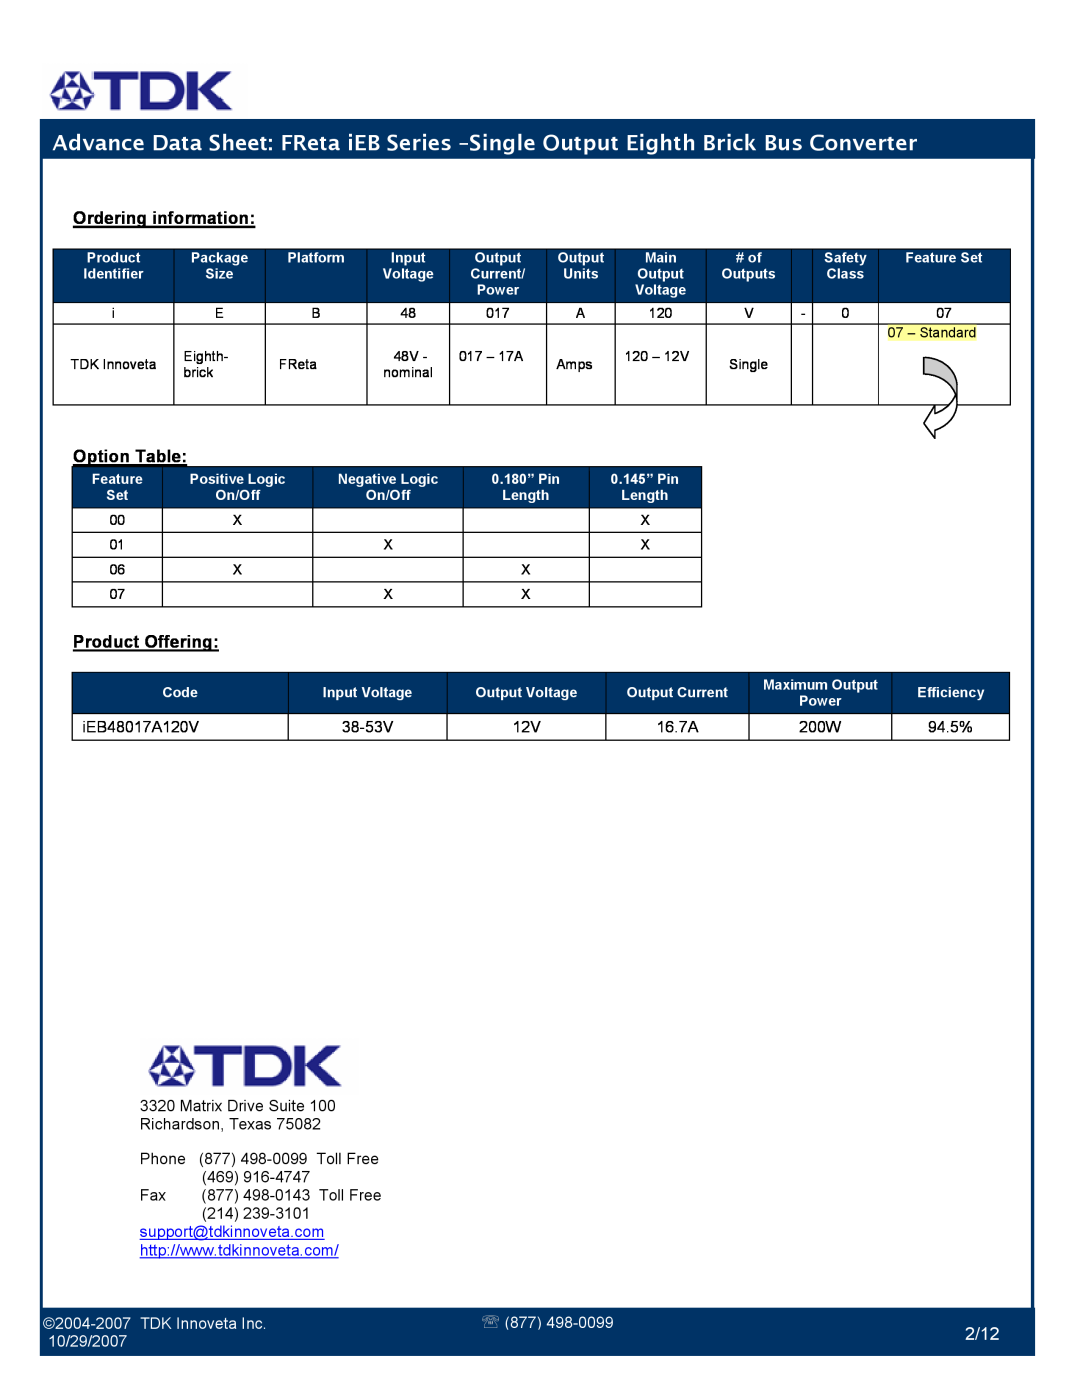 TDK iEB Series manual Option Table, 2/12, iEB48017A120V, 38-53V, 16.7A, 94.5%, Matrix Drive Suite Richardson, Texas, Phone 